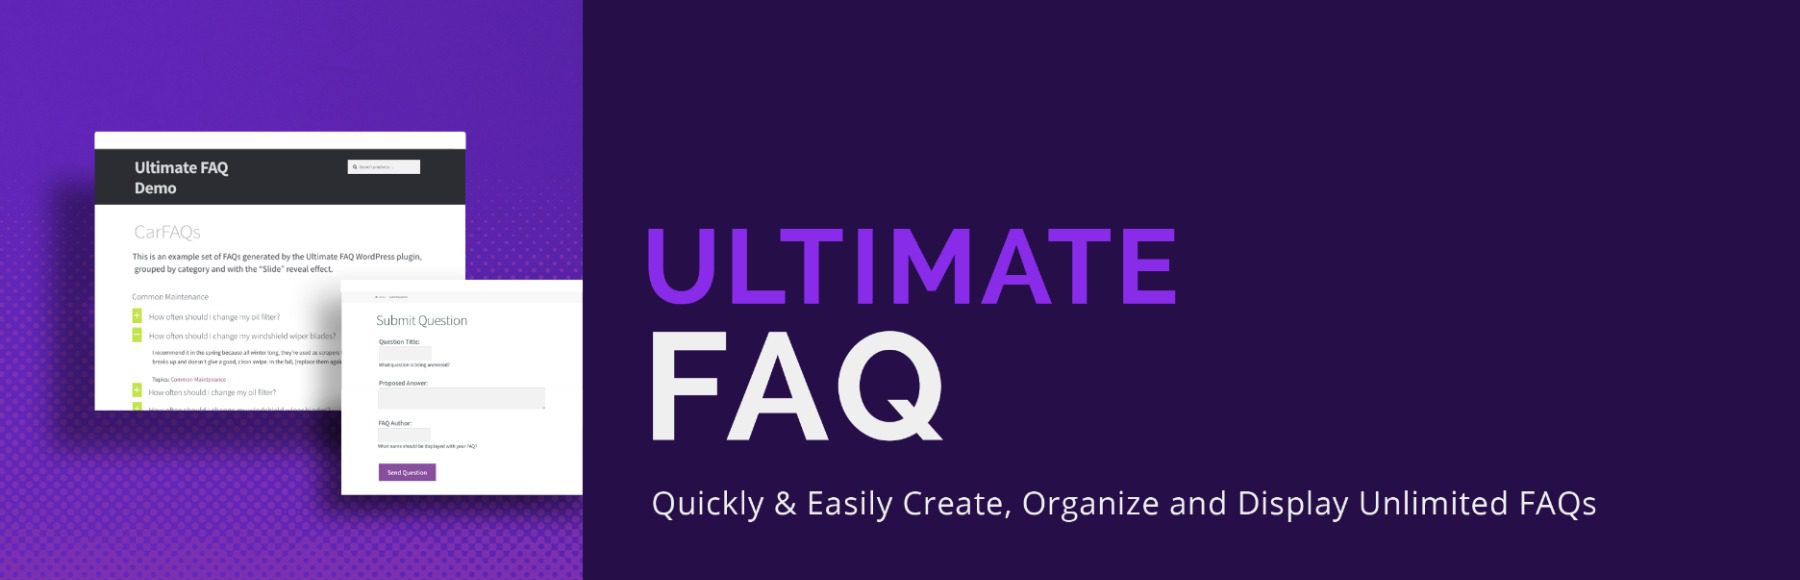 Ultimate-FAQ